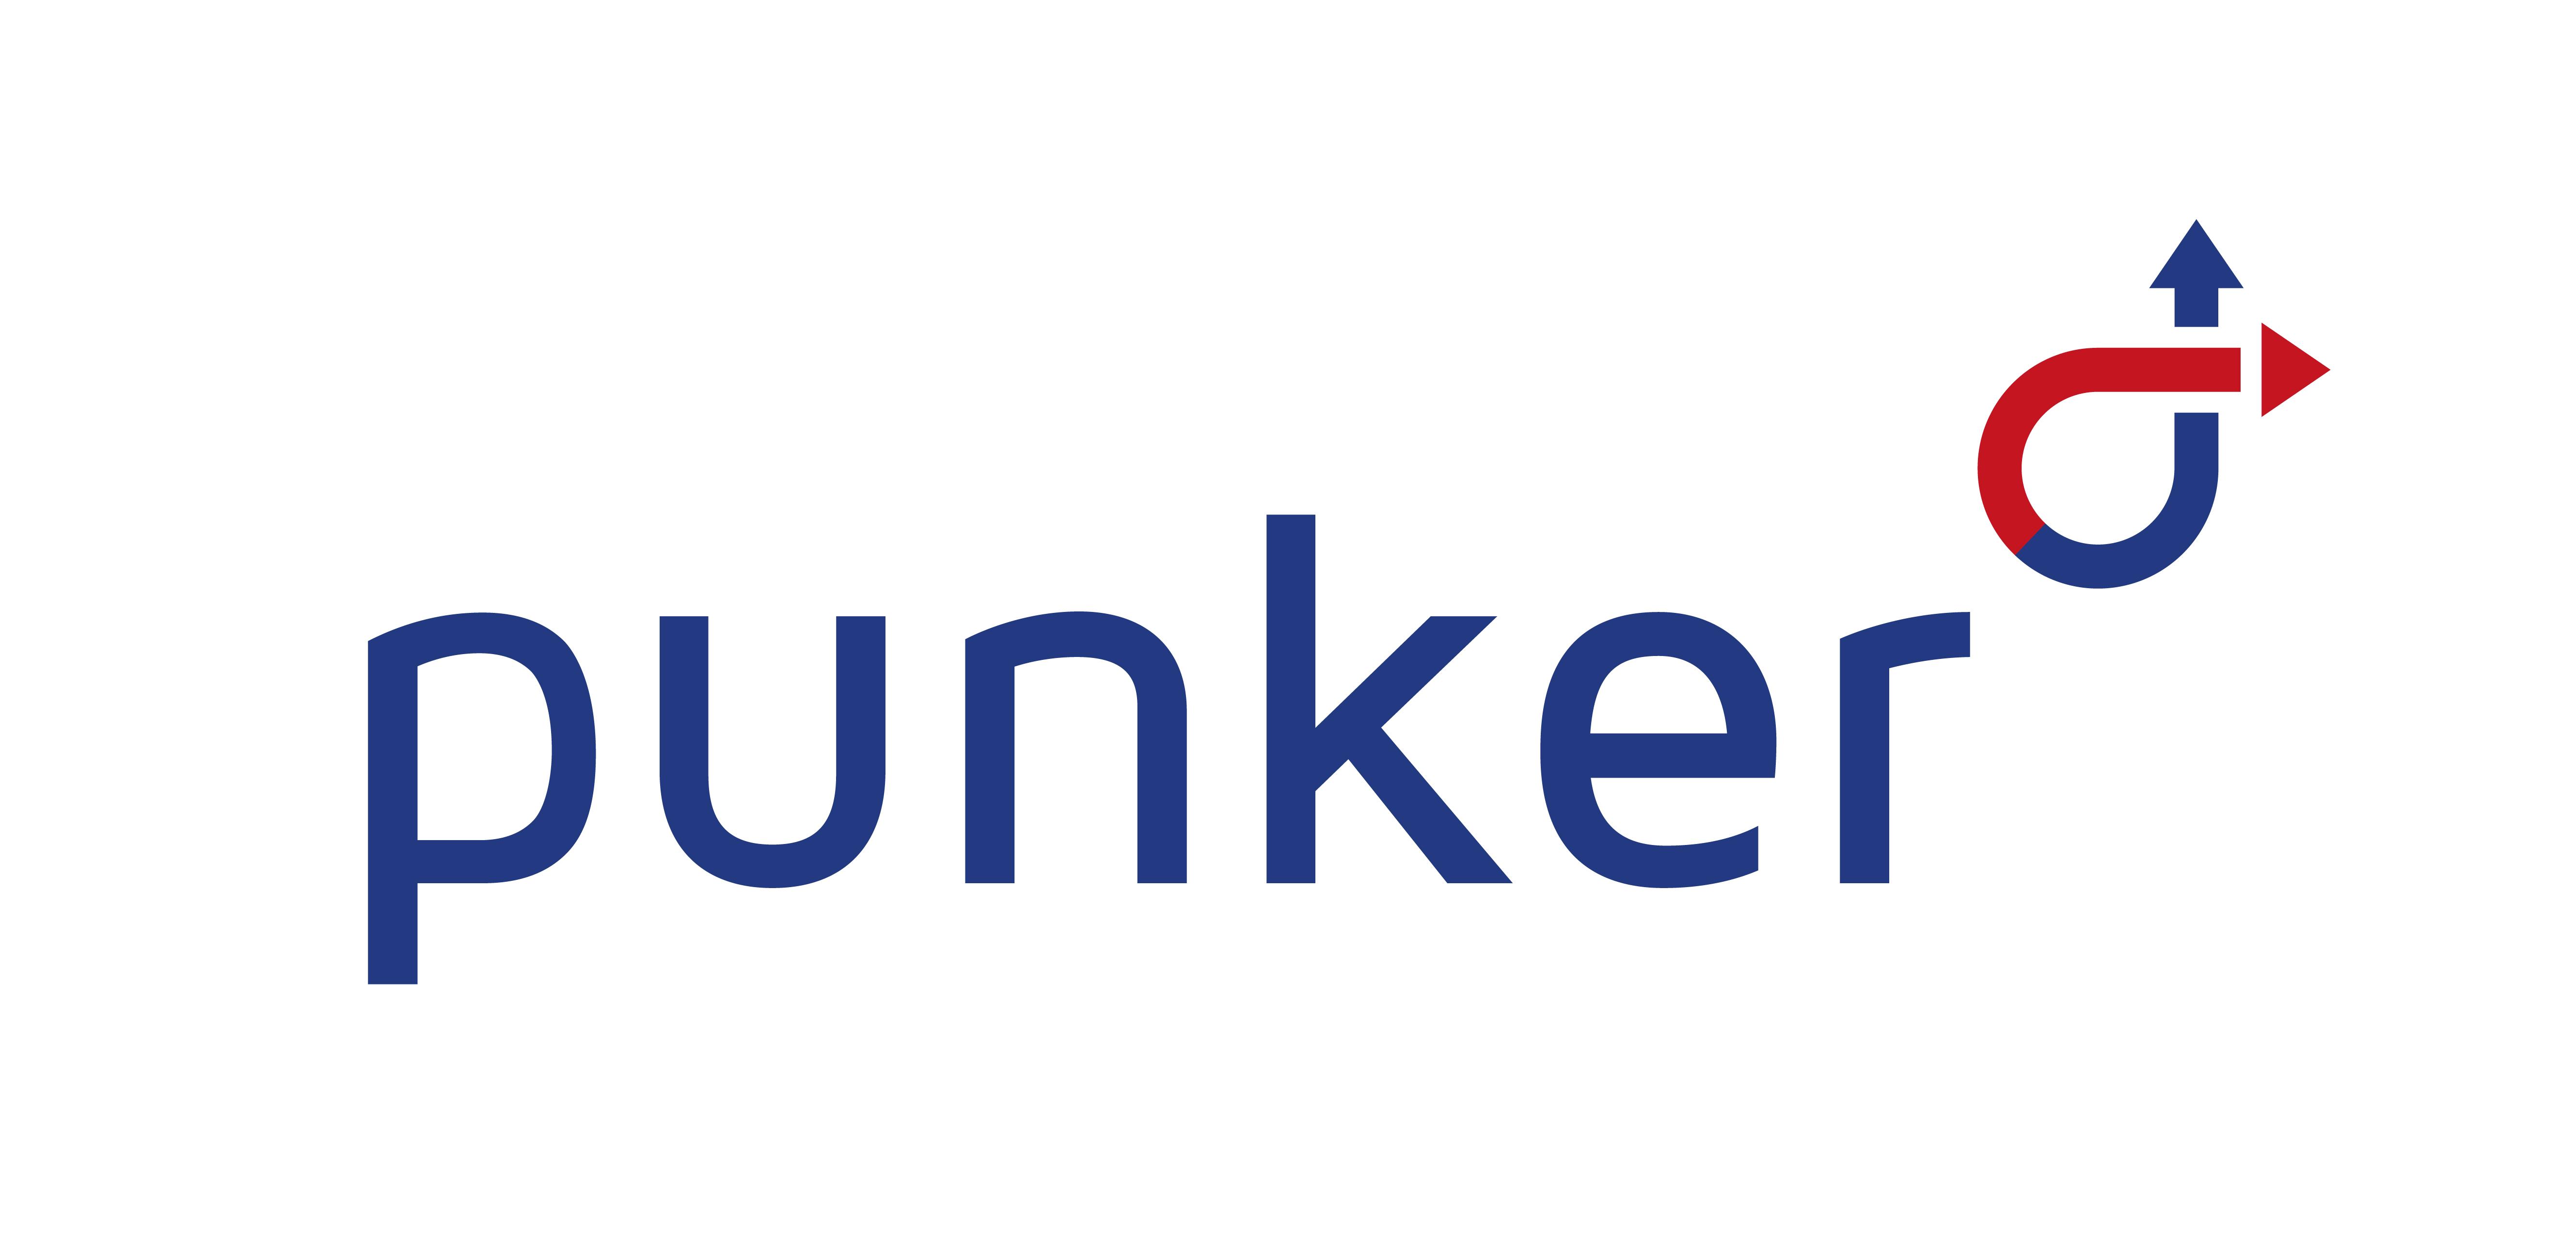 punker GmbH